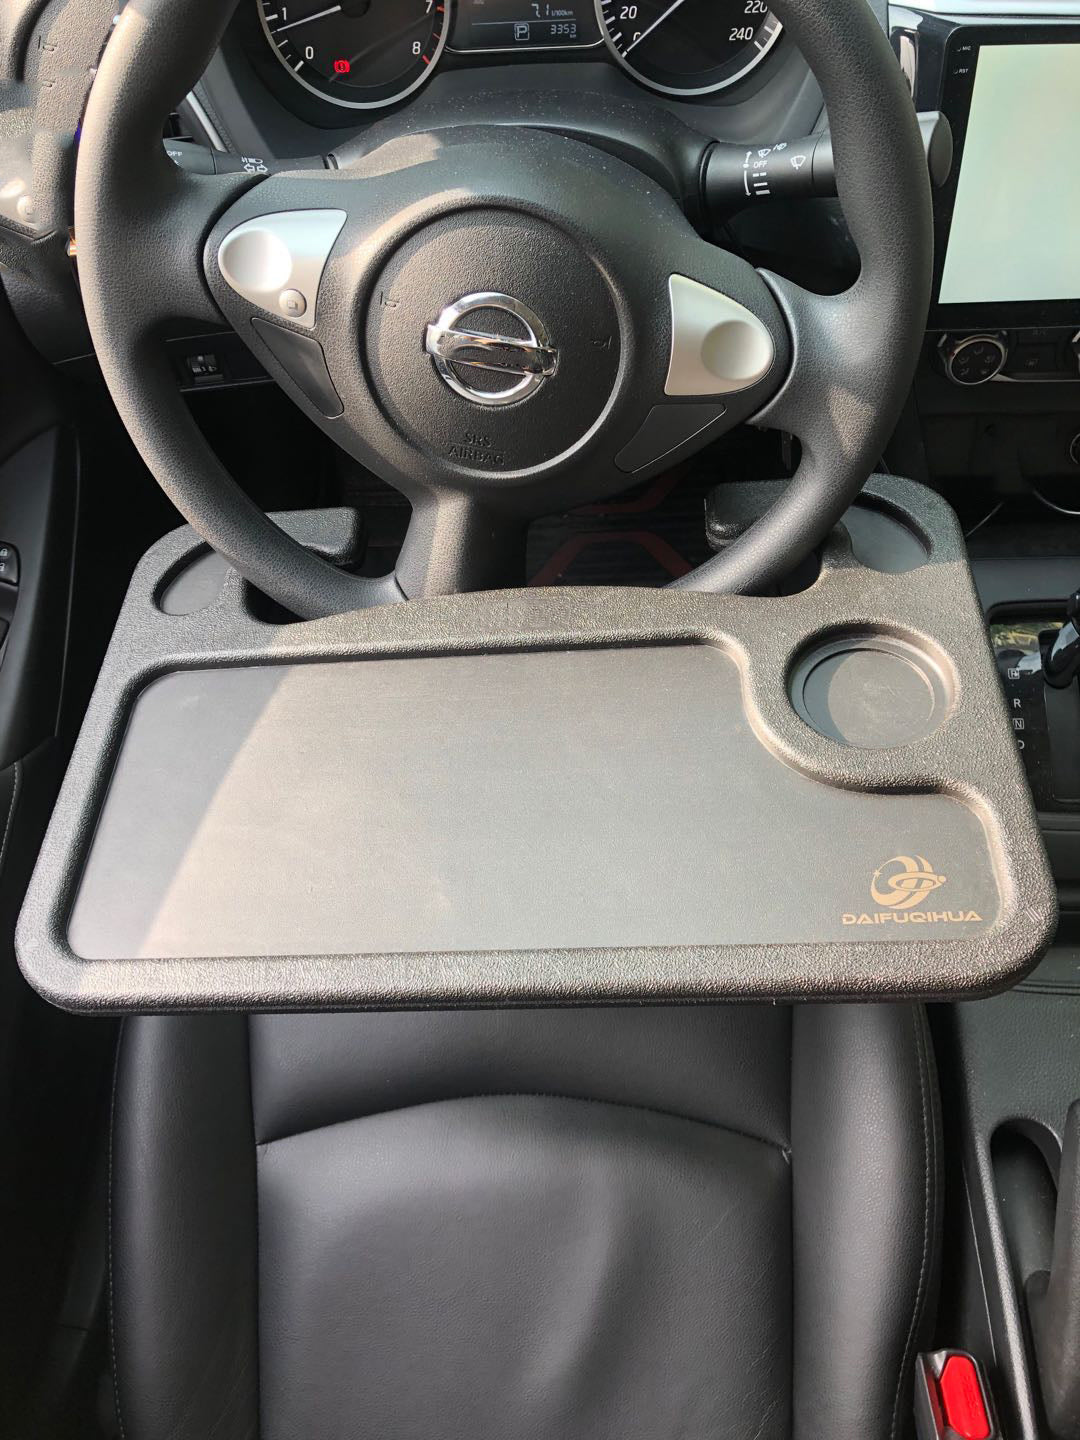 DAIFUQIHUA Steering Wheel Tray Portable Multifunctional Desk for Lapto